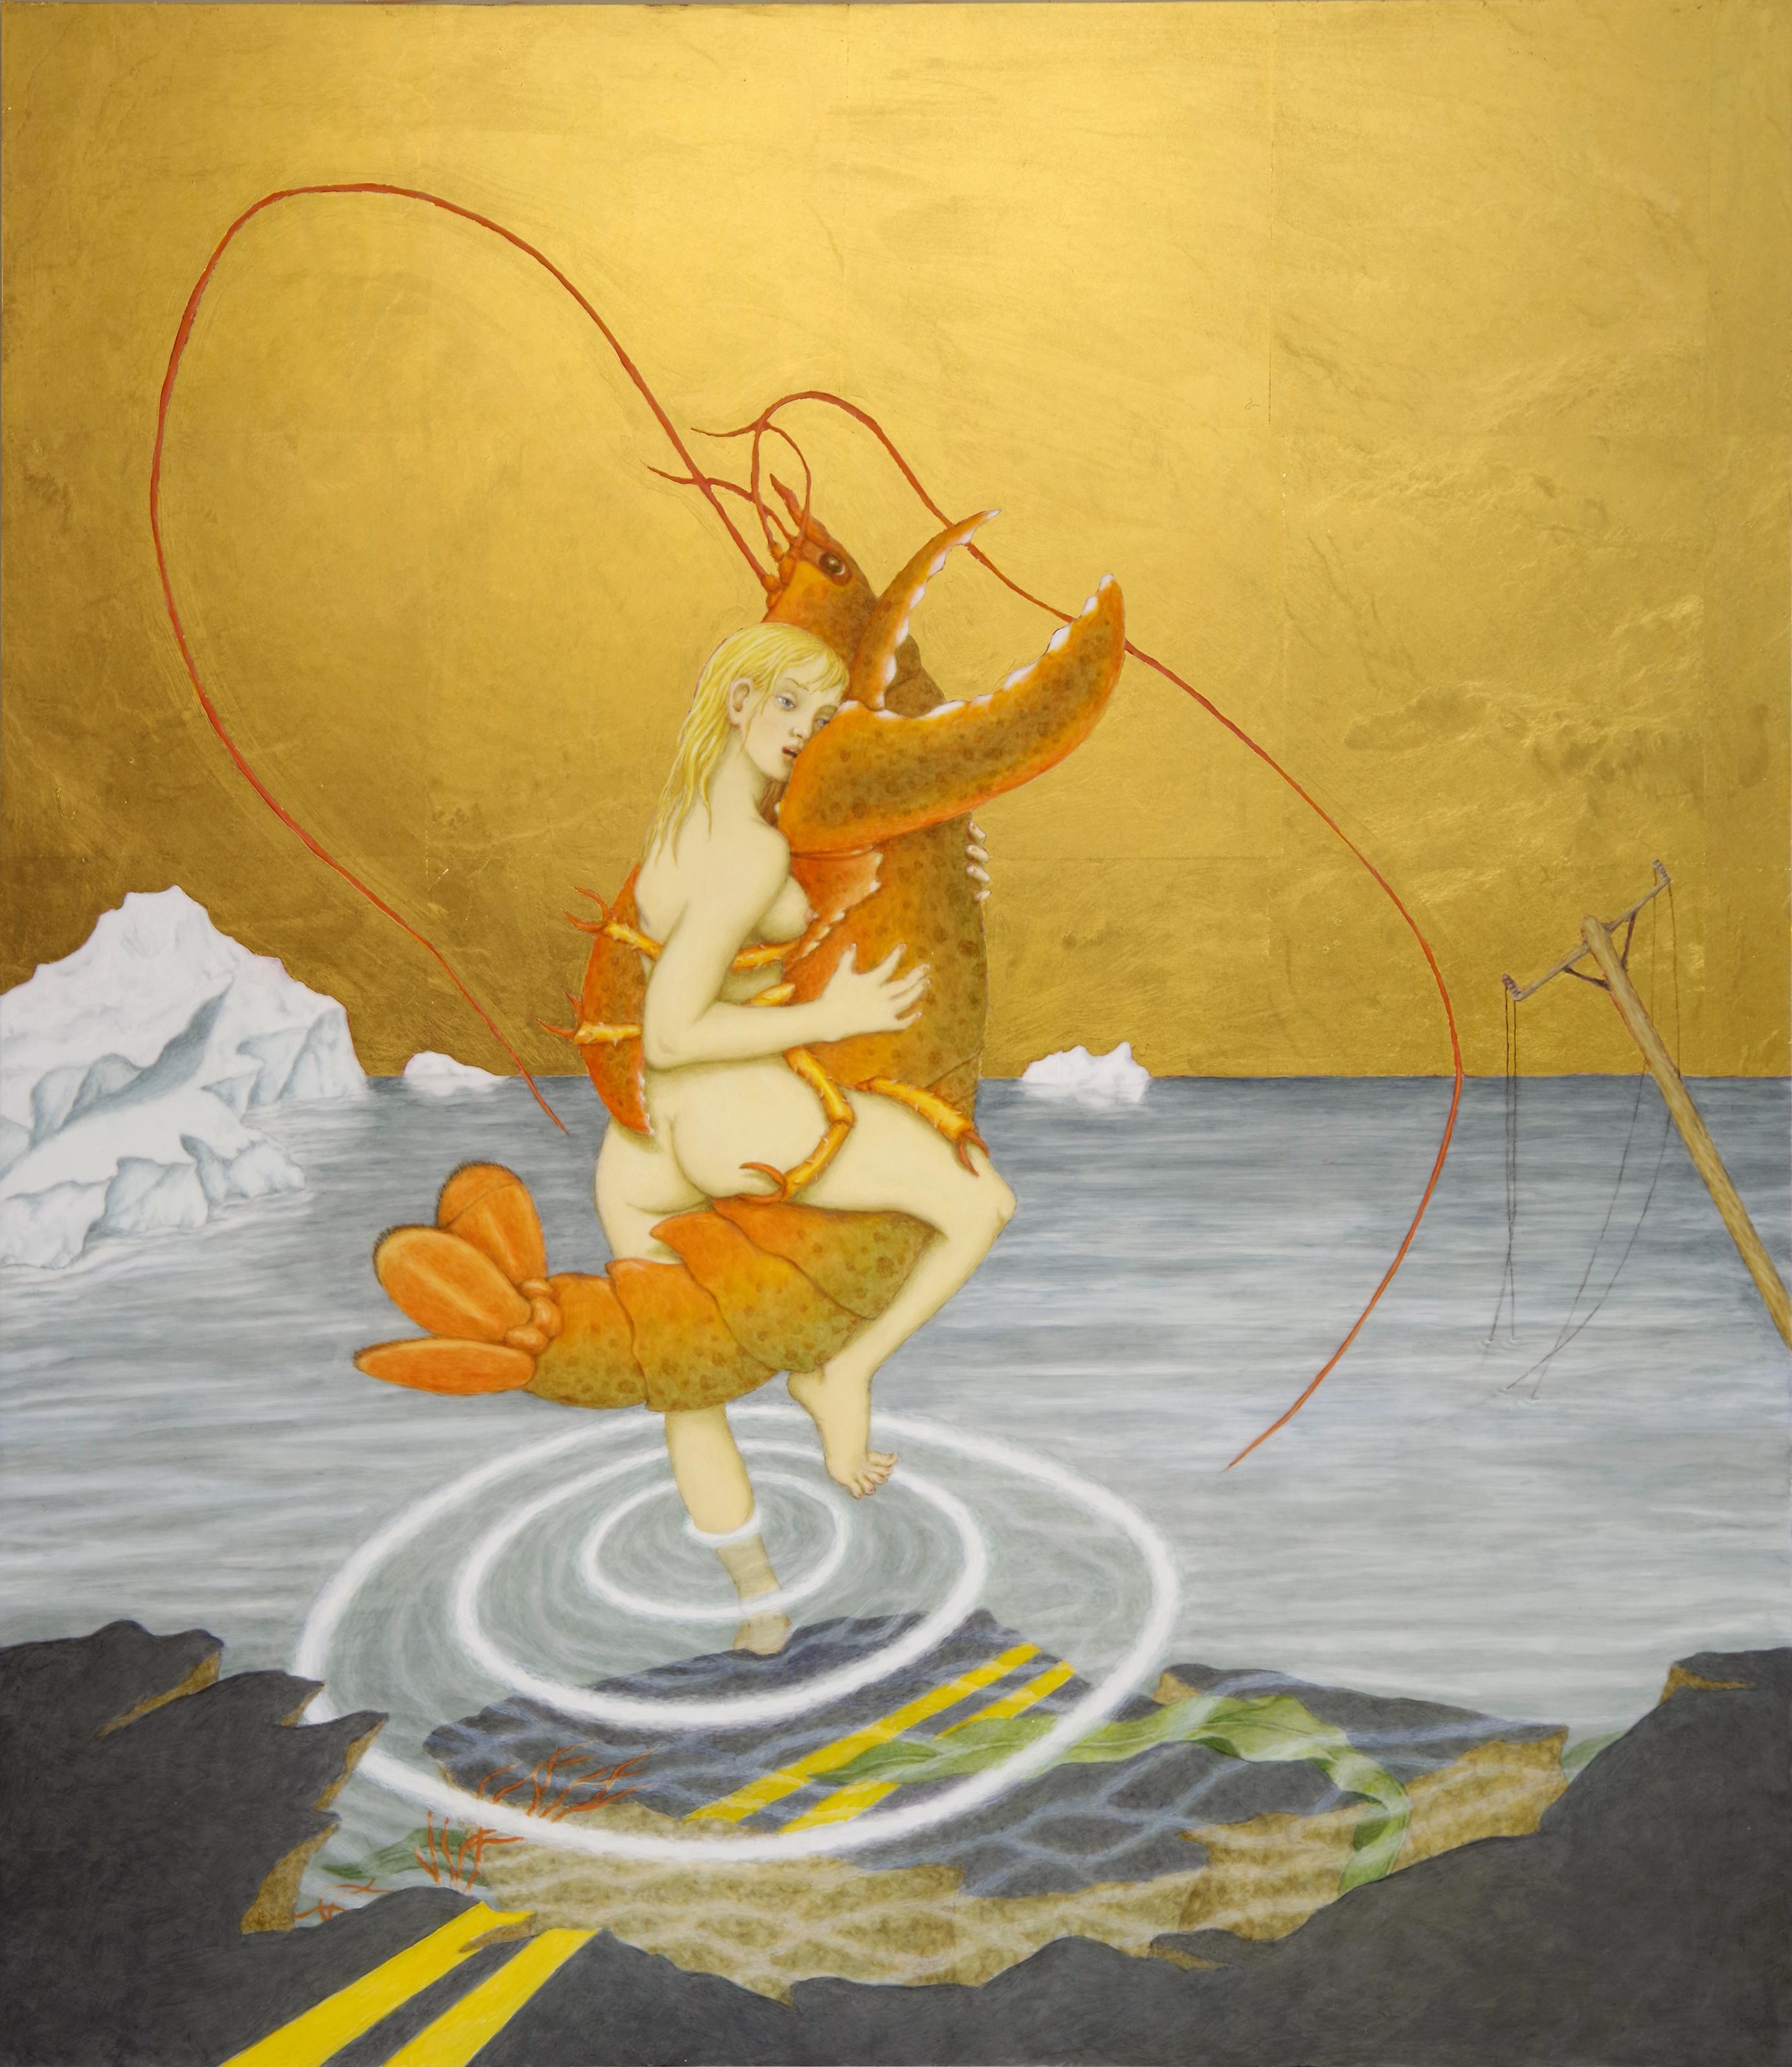 Shiva: Sea Change - Painting by Tabitha Vevers